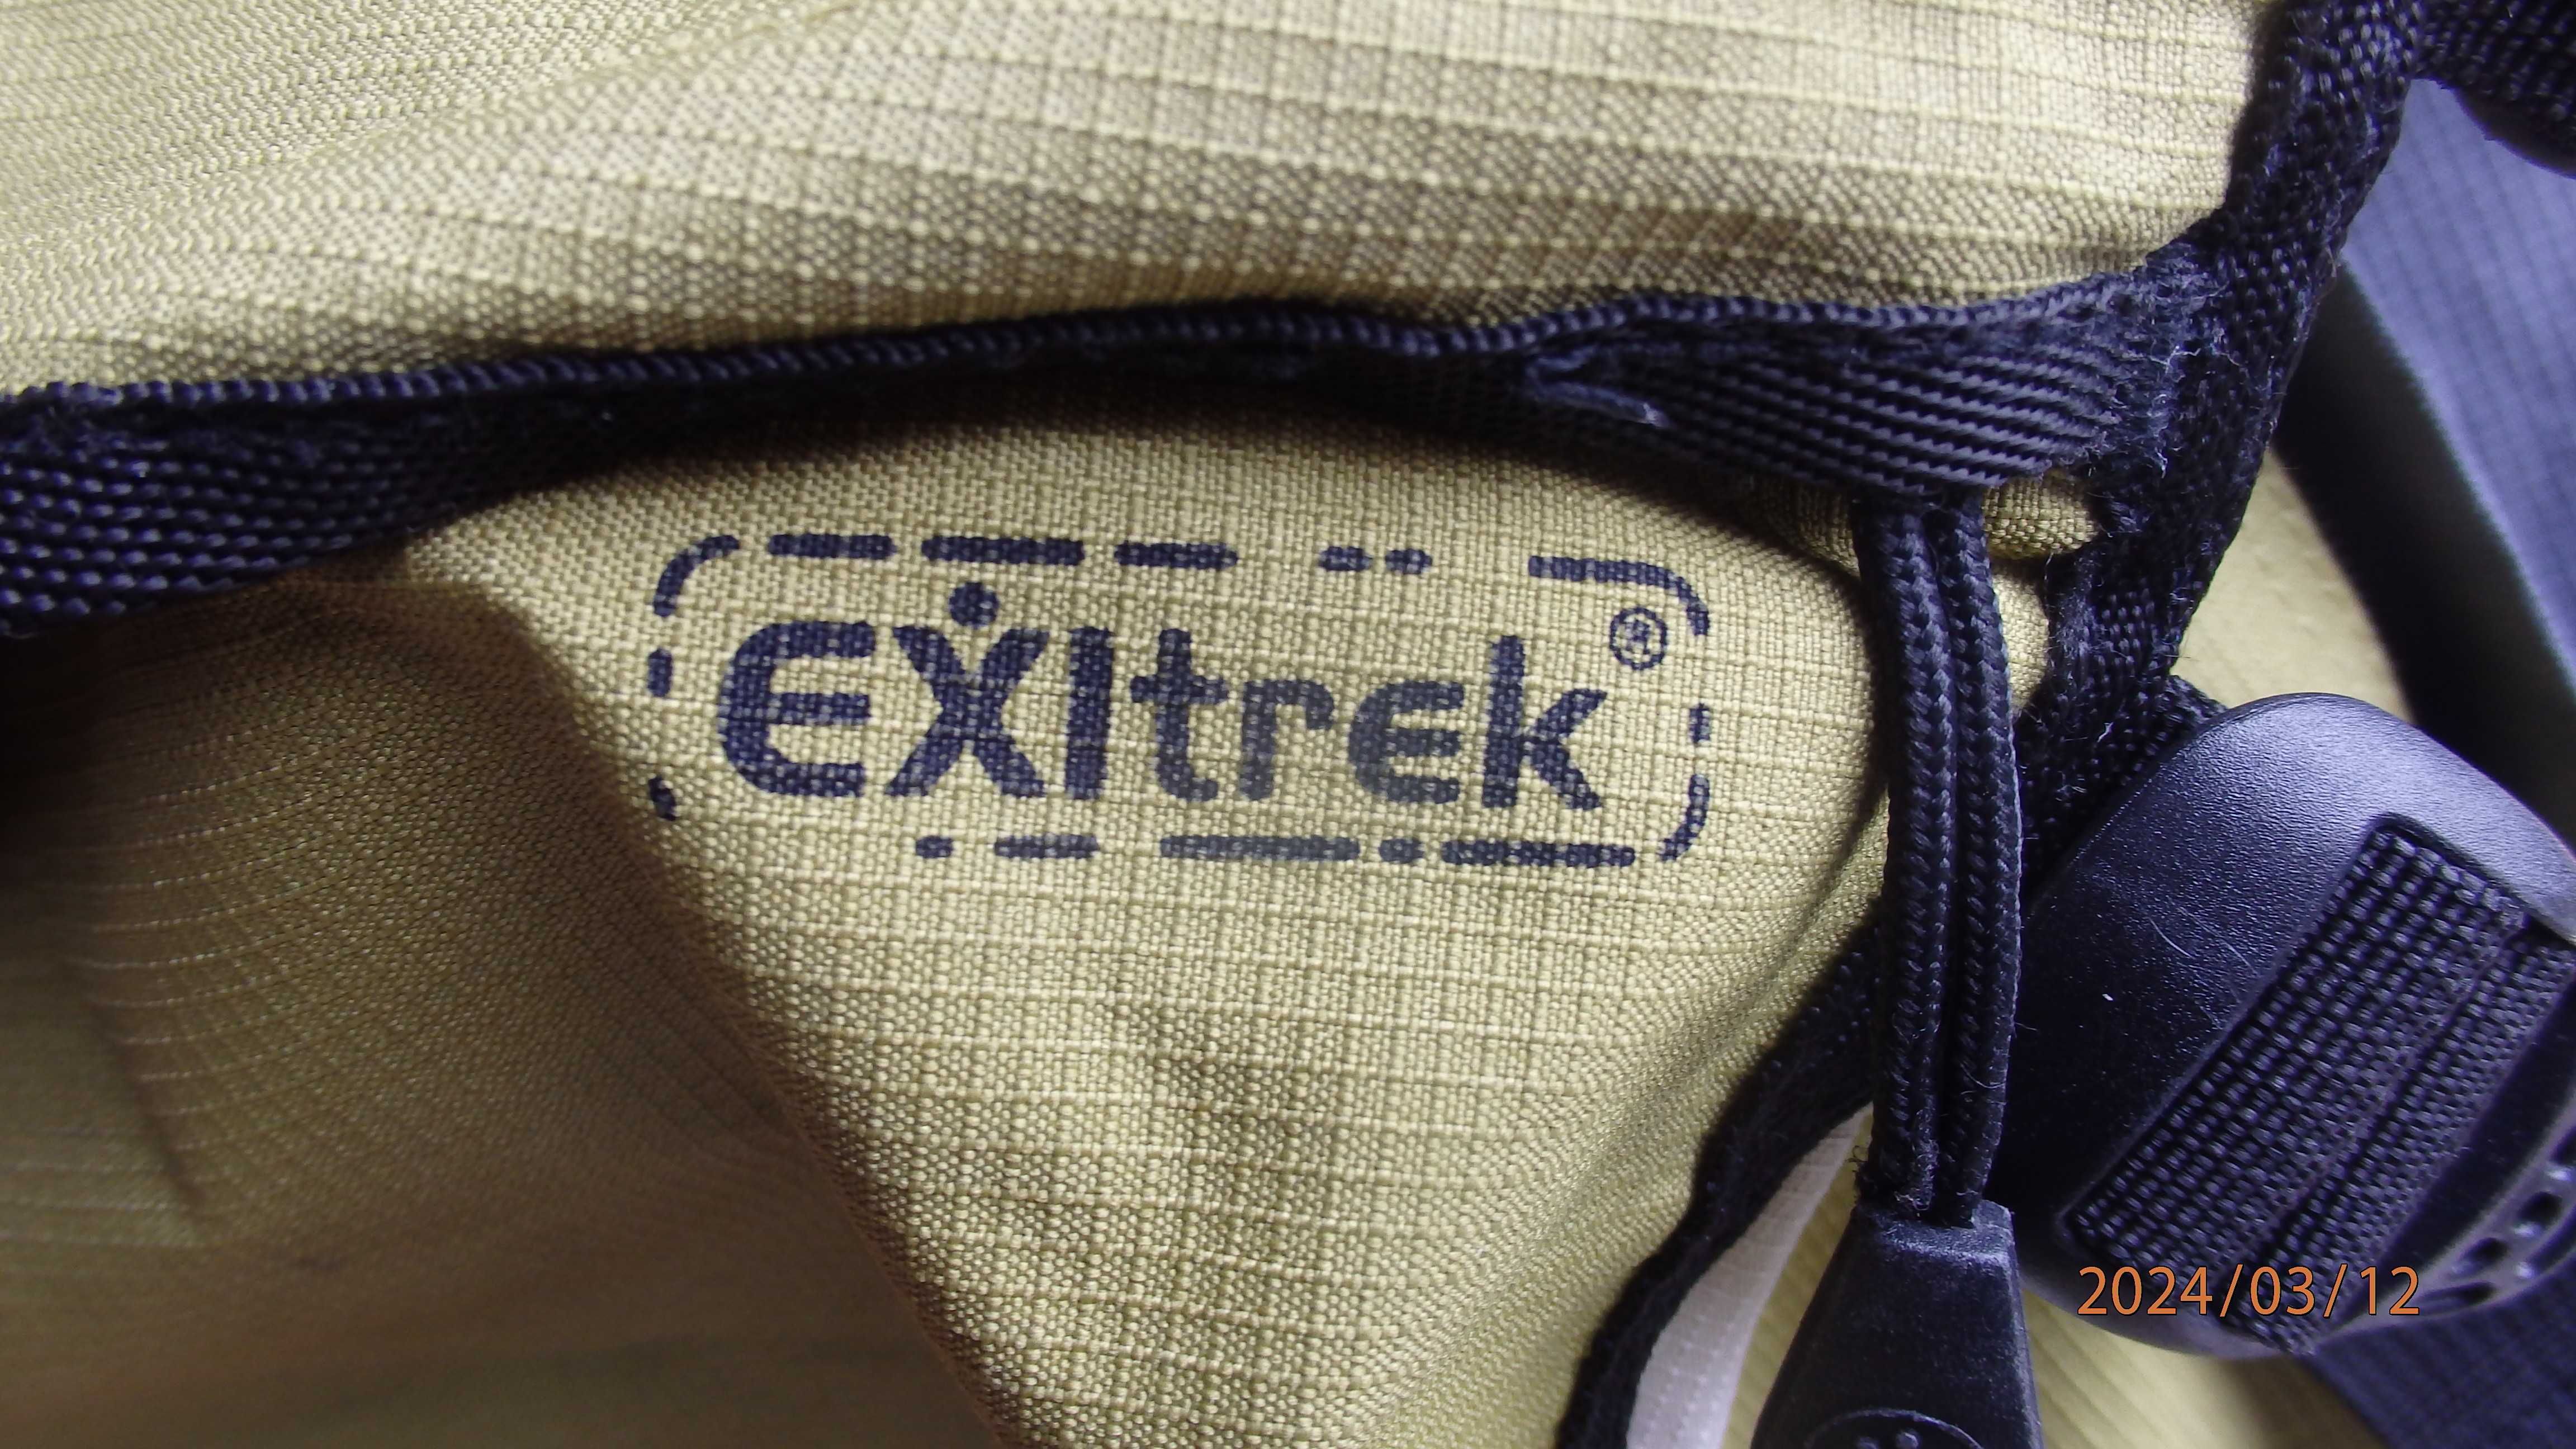 Plecak podróżny średni firmy EXItrek.